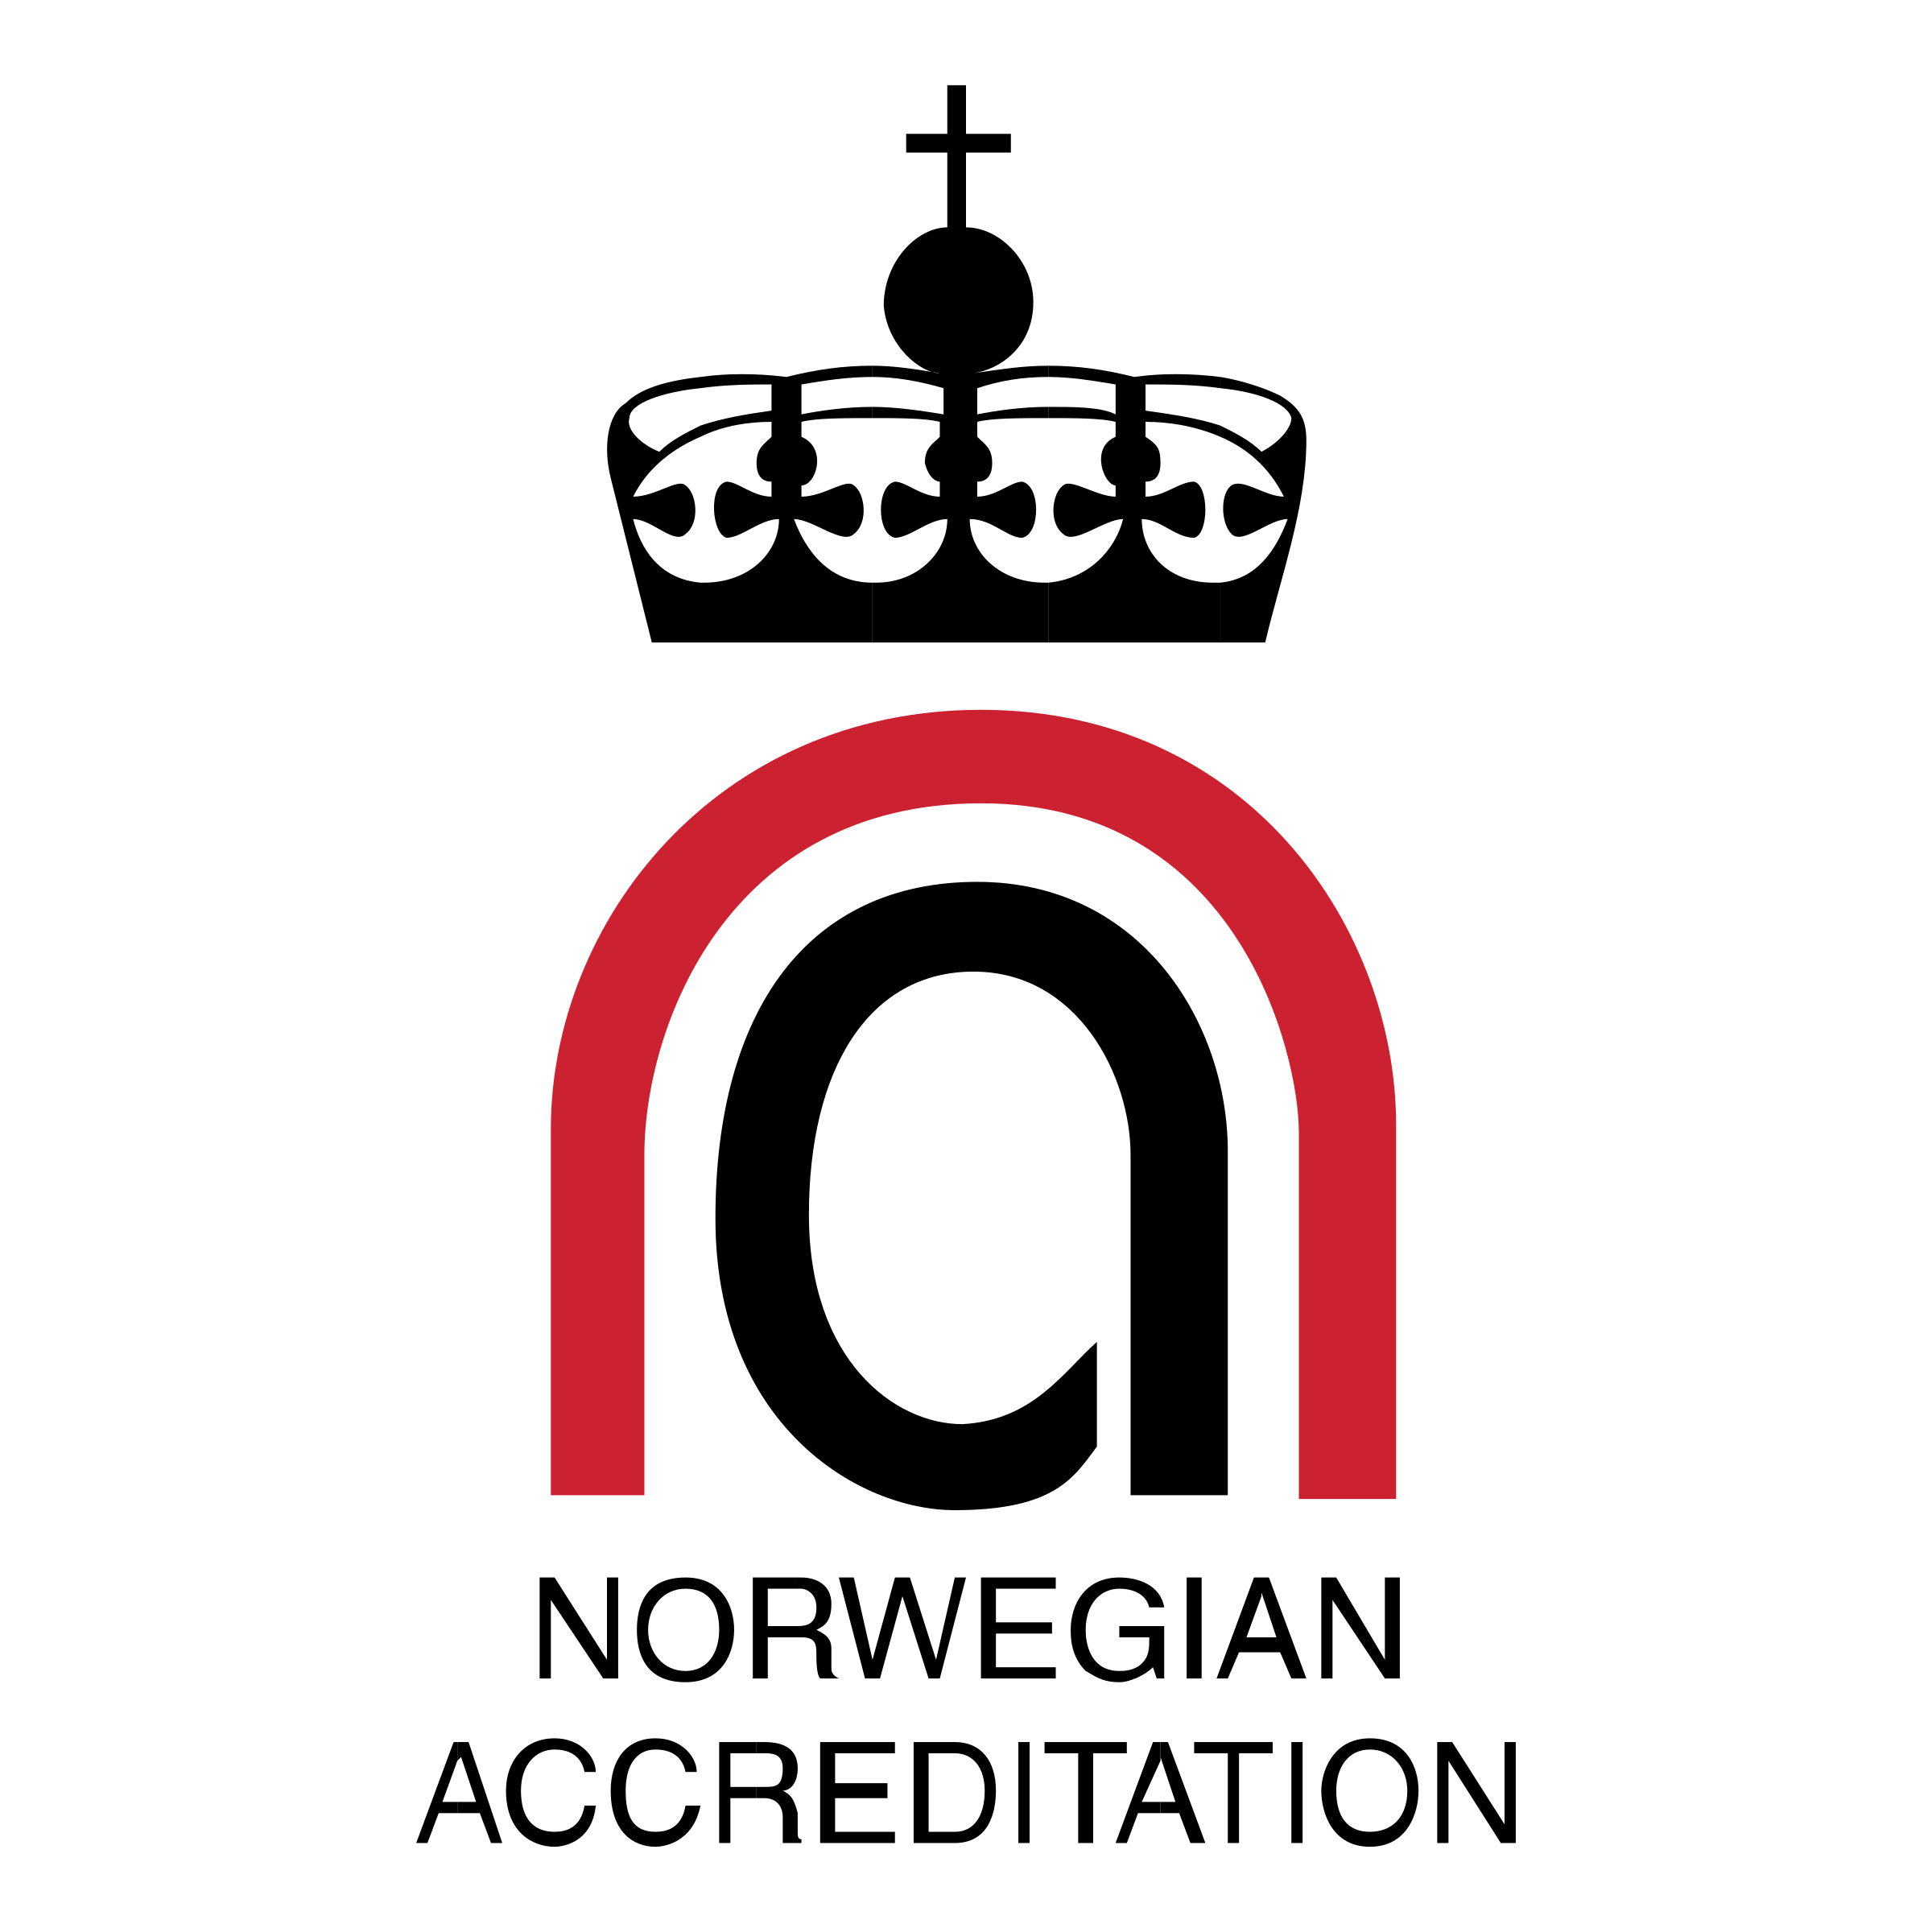 Accreditation Logo - Norwegian Accreditation Logo PNG Transparent & SVG Vector - Freebie ...